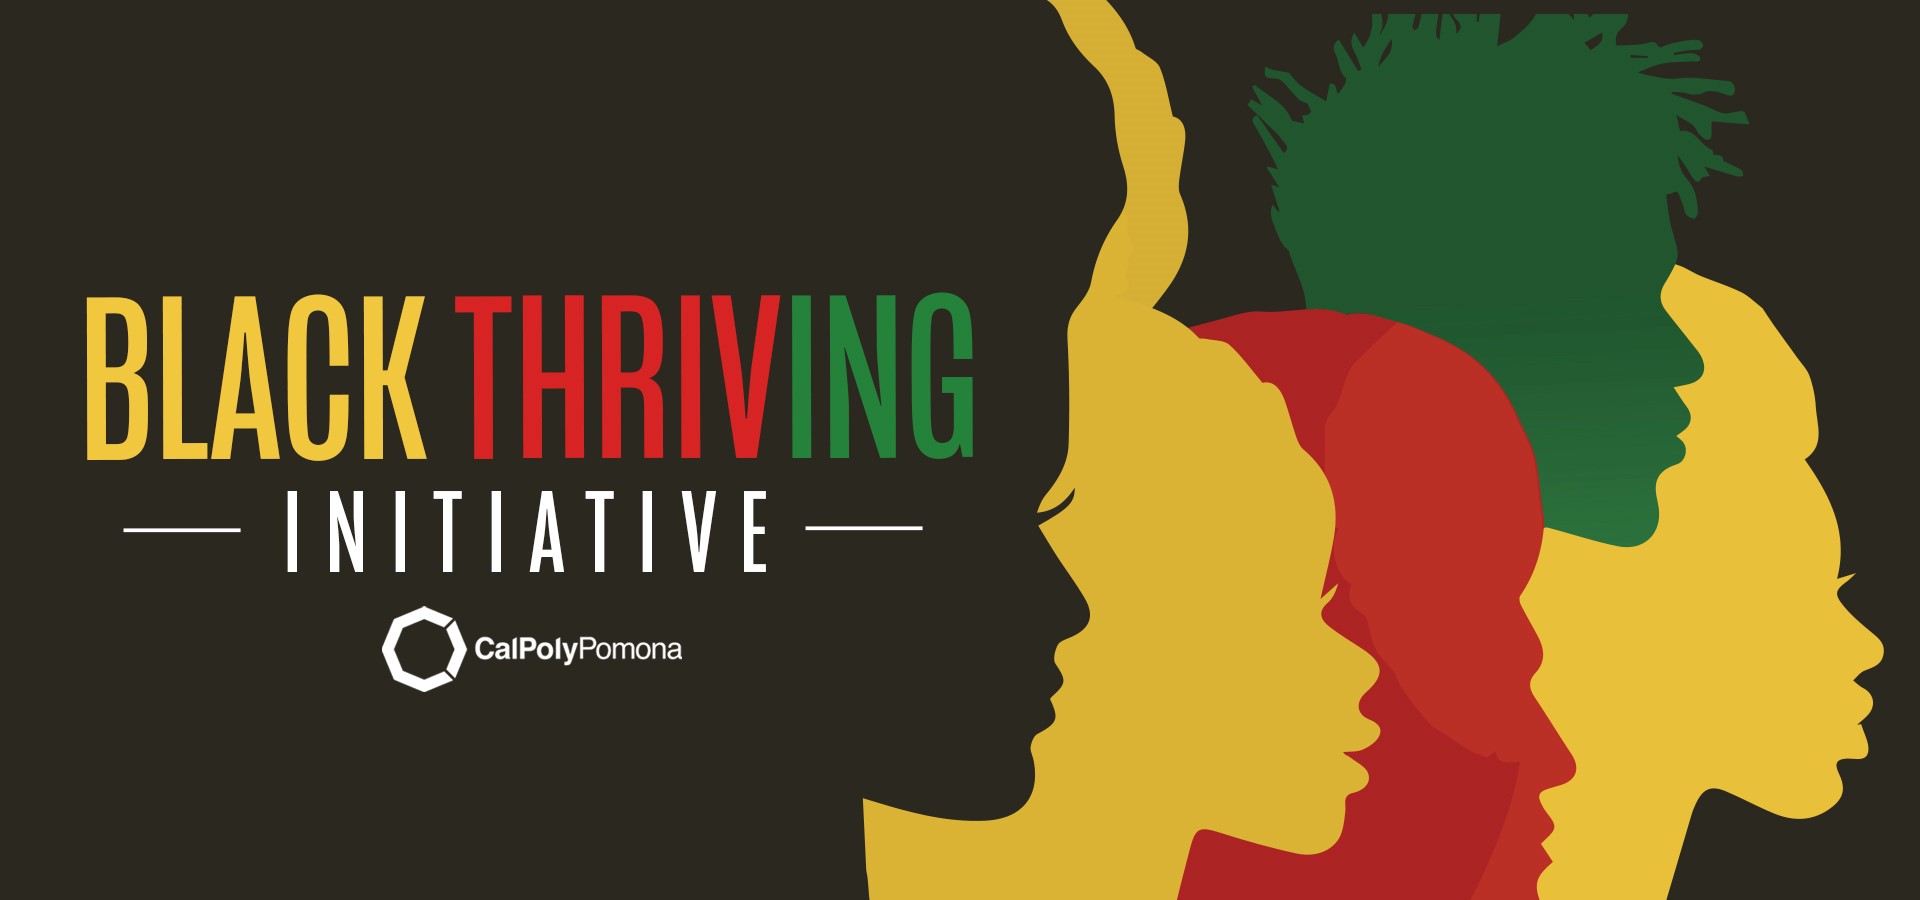 Black Thriving Initiative 